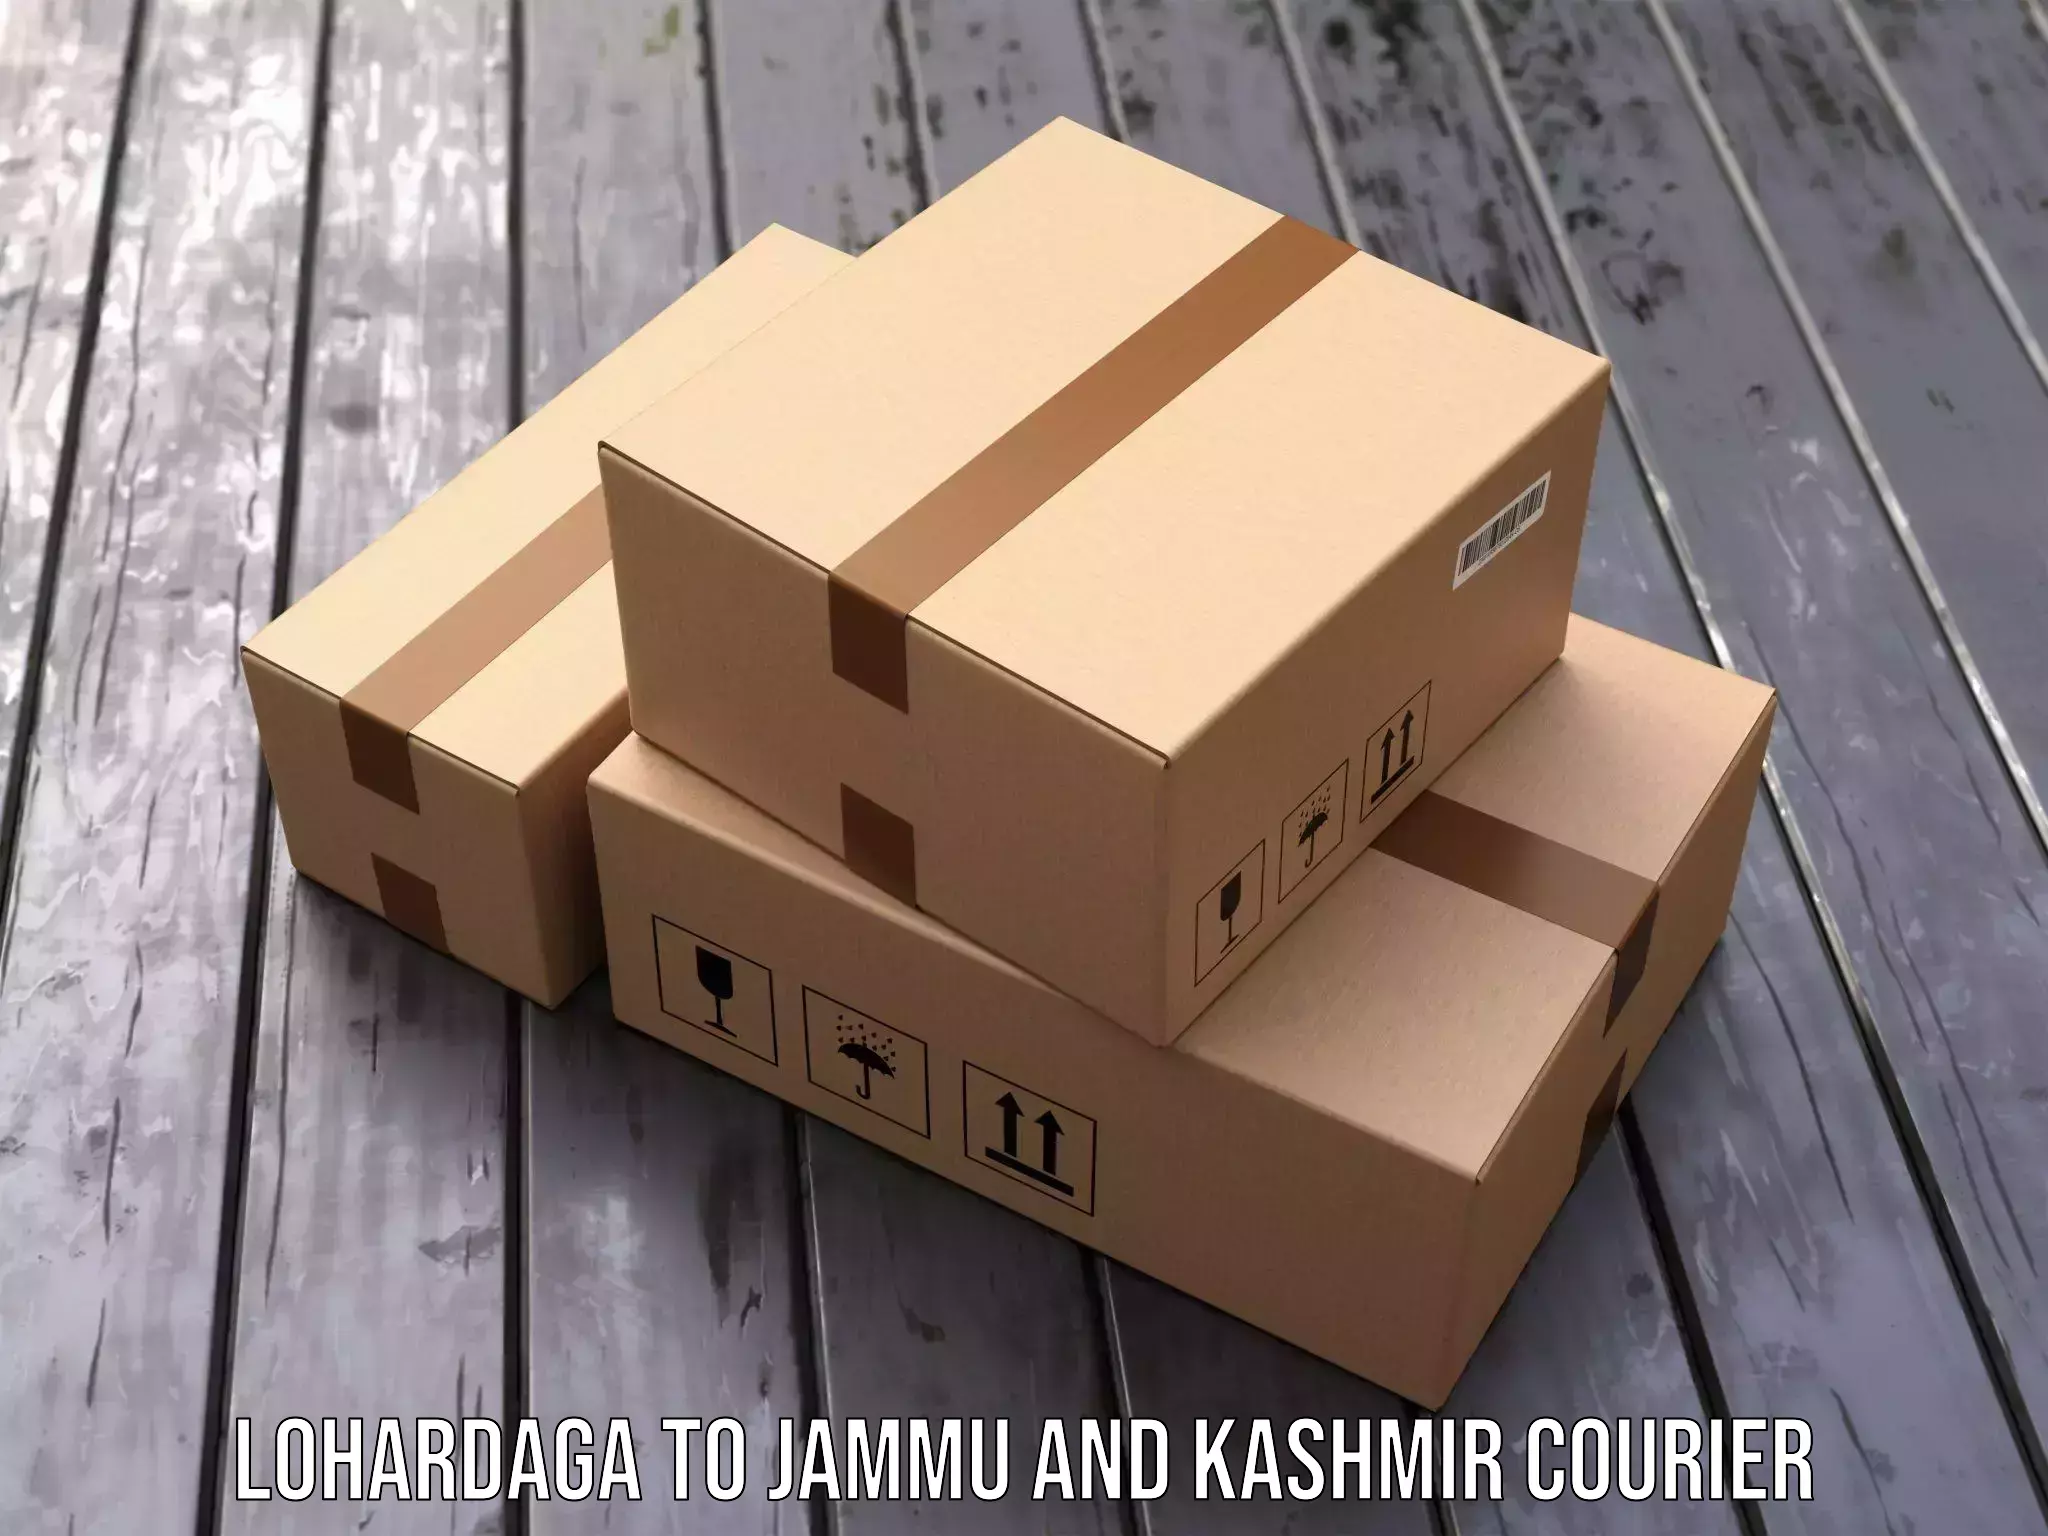 Overnight delivery services Lohardaga to Srinagar Kashmir